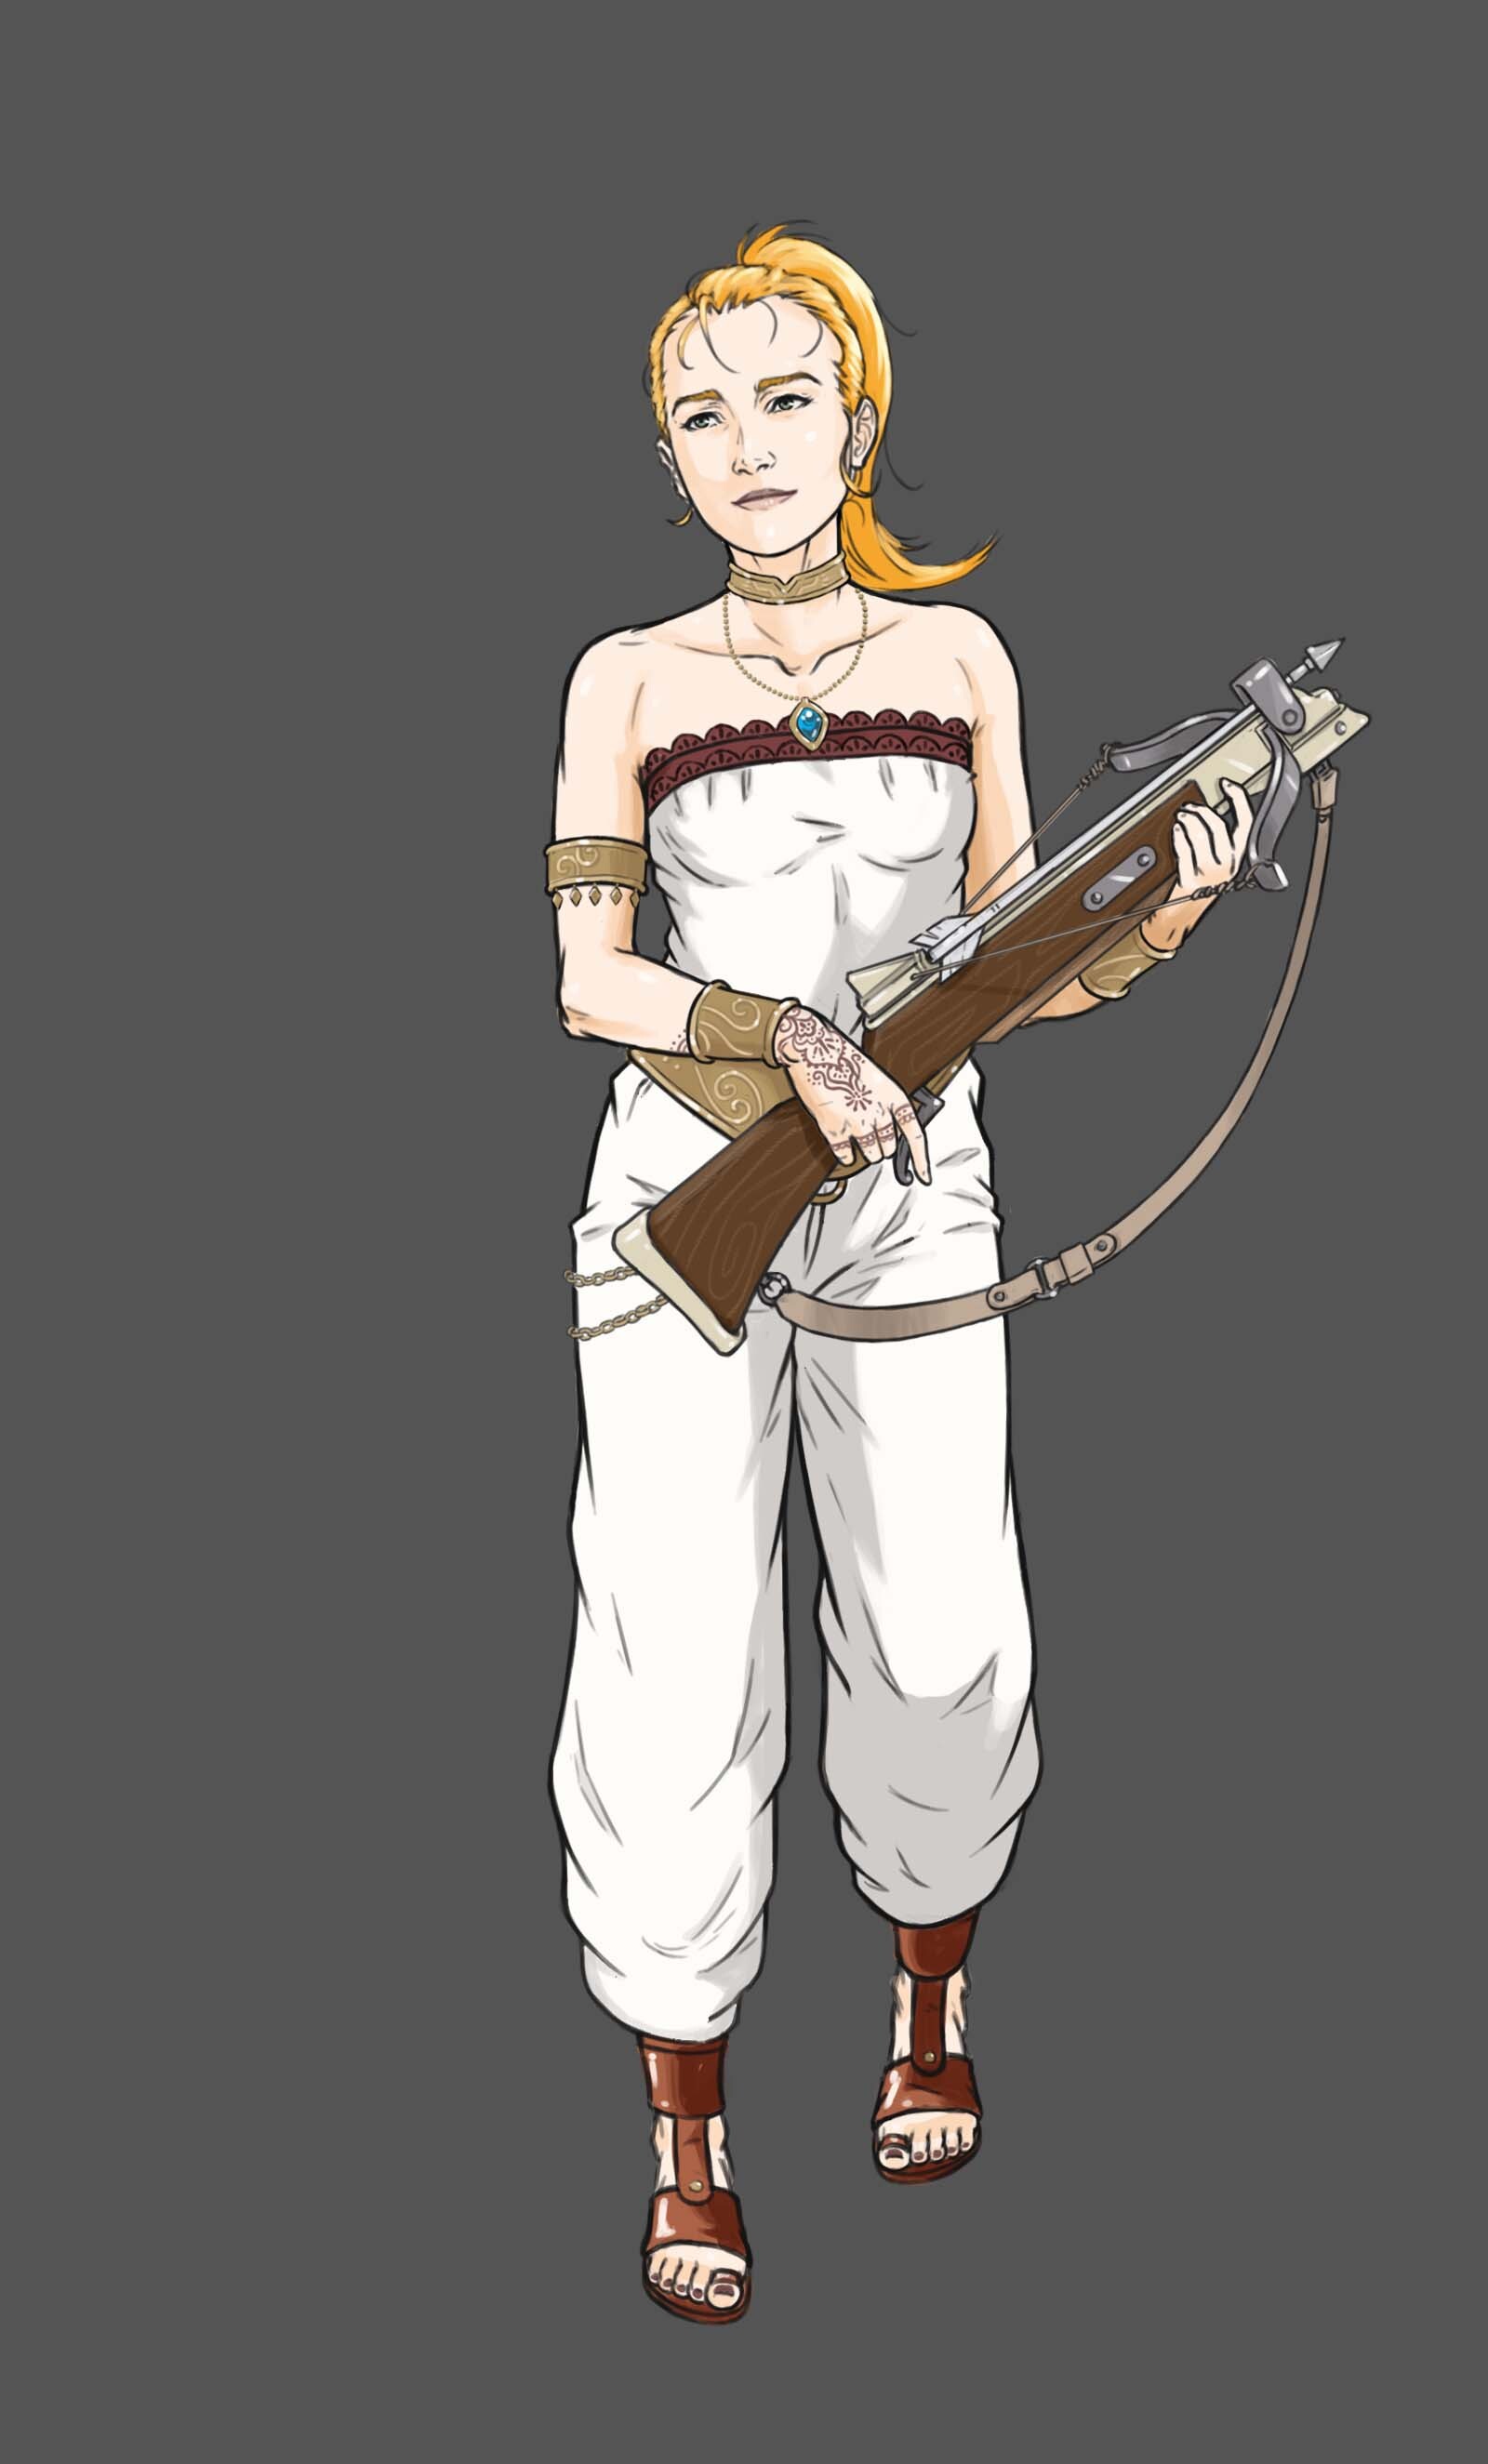 ArtStation - Chrono Cross character redesign